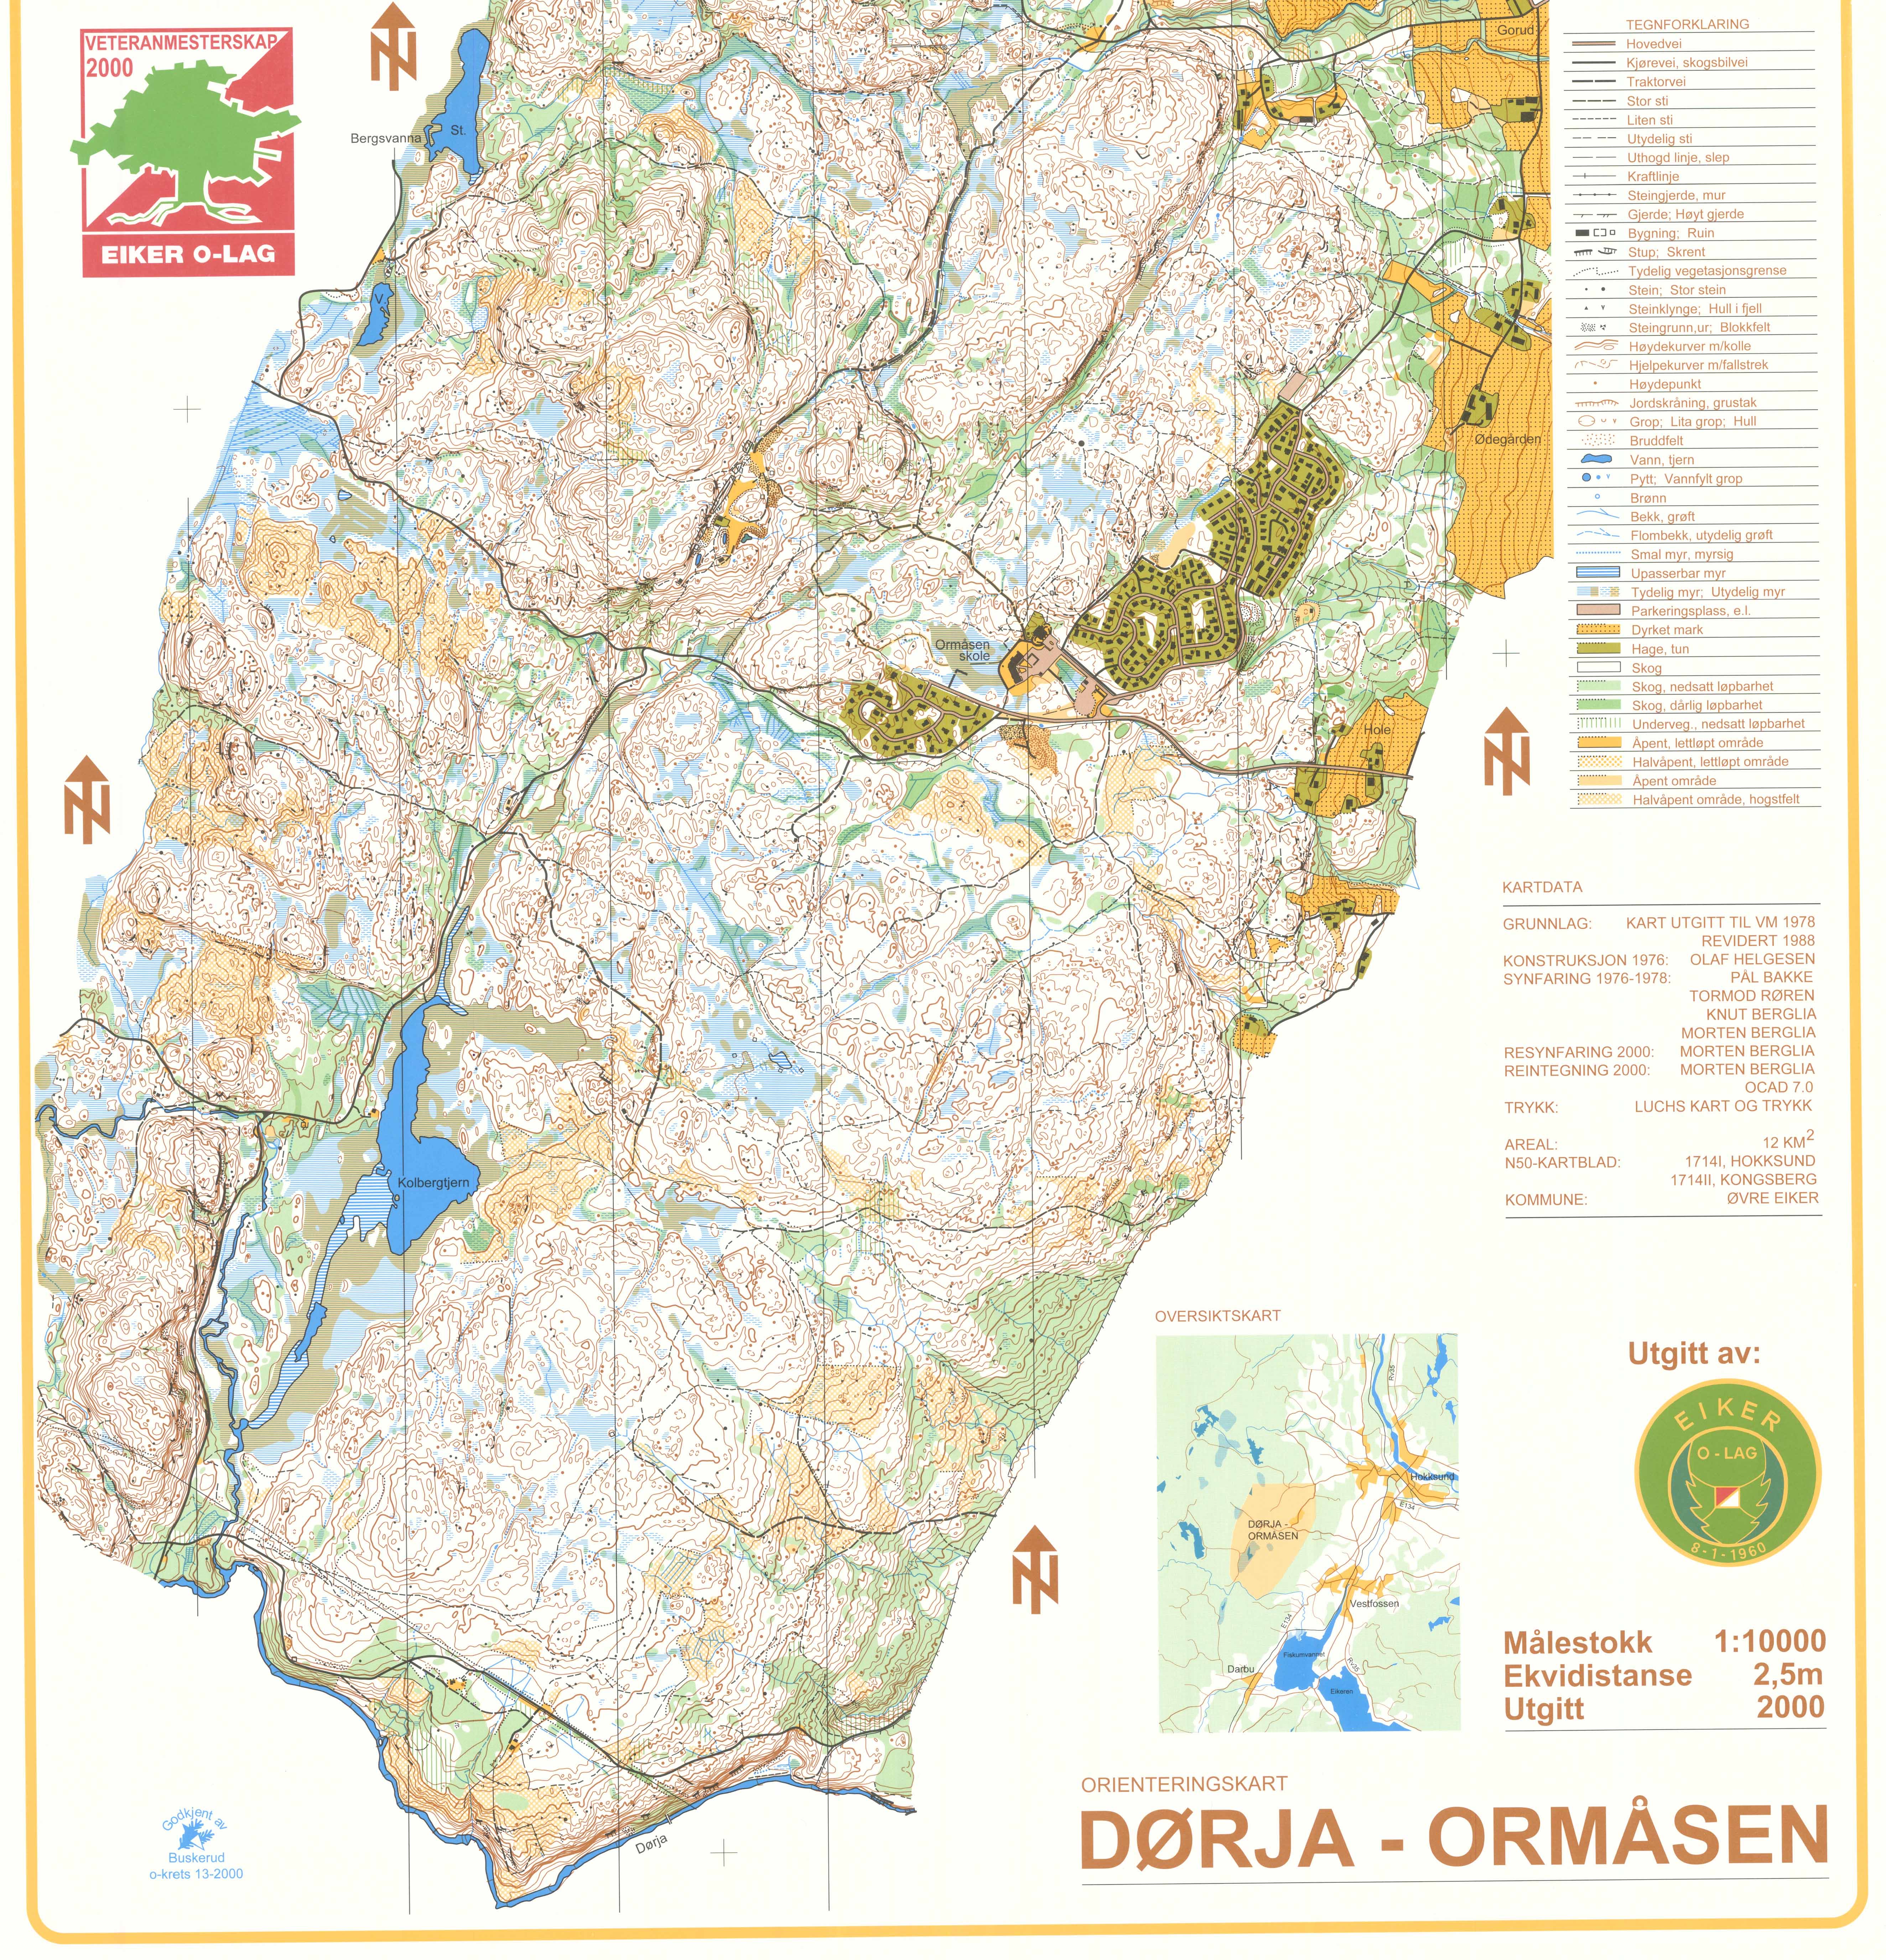 Dørja - Ormåsen (01/01/2000)